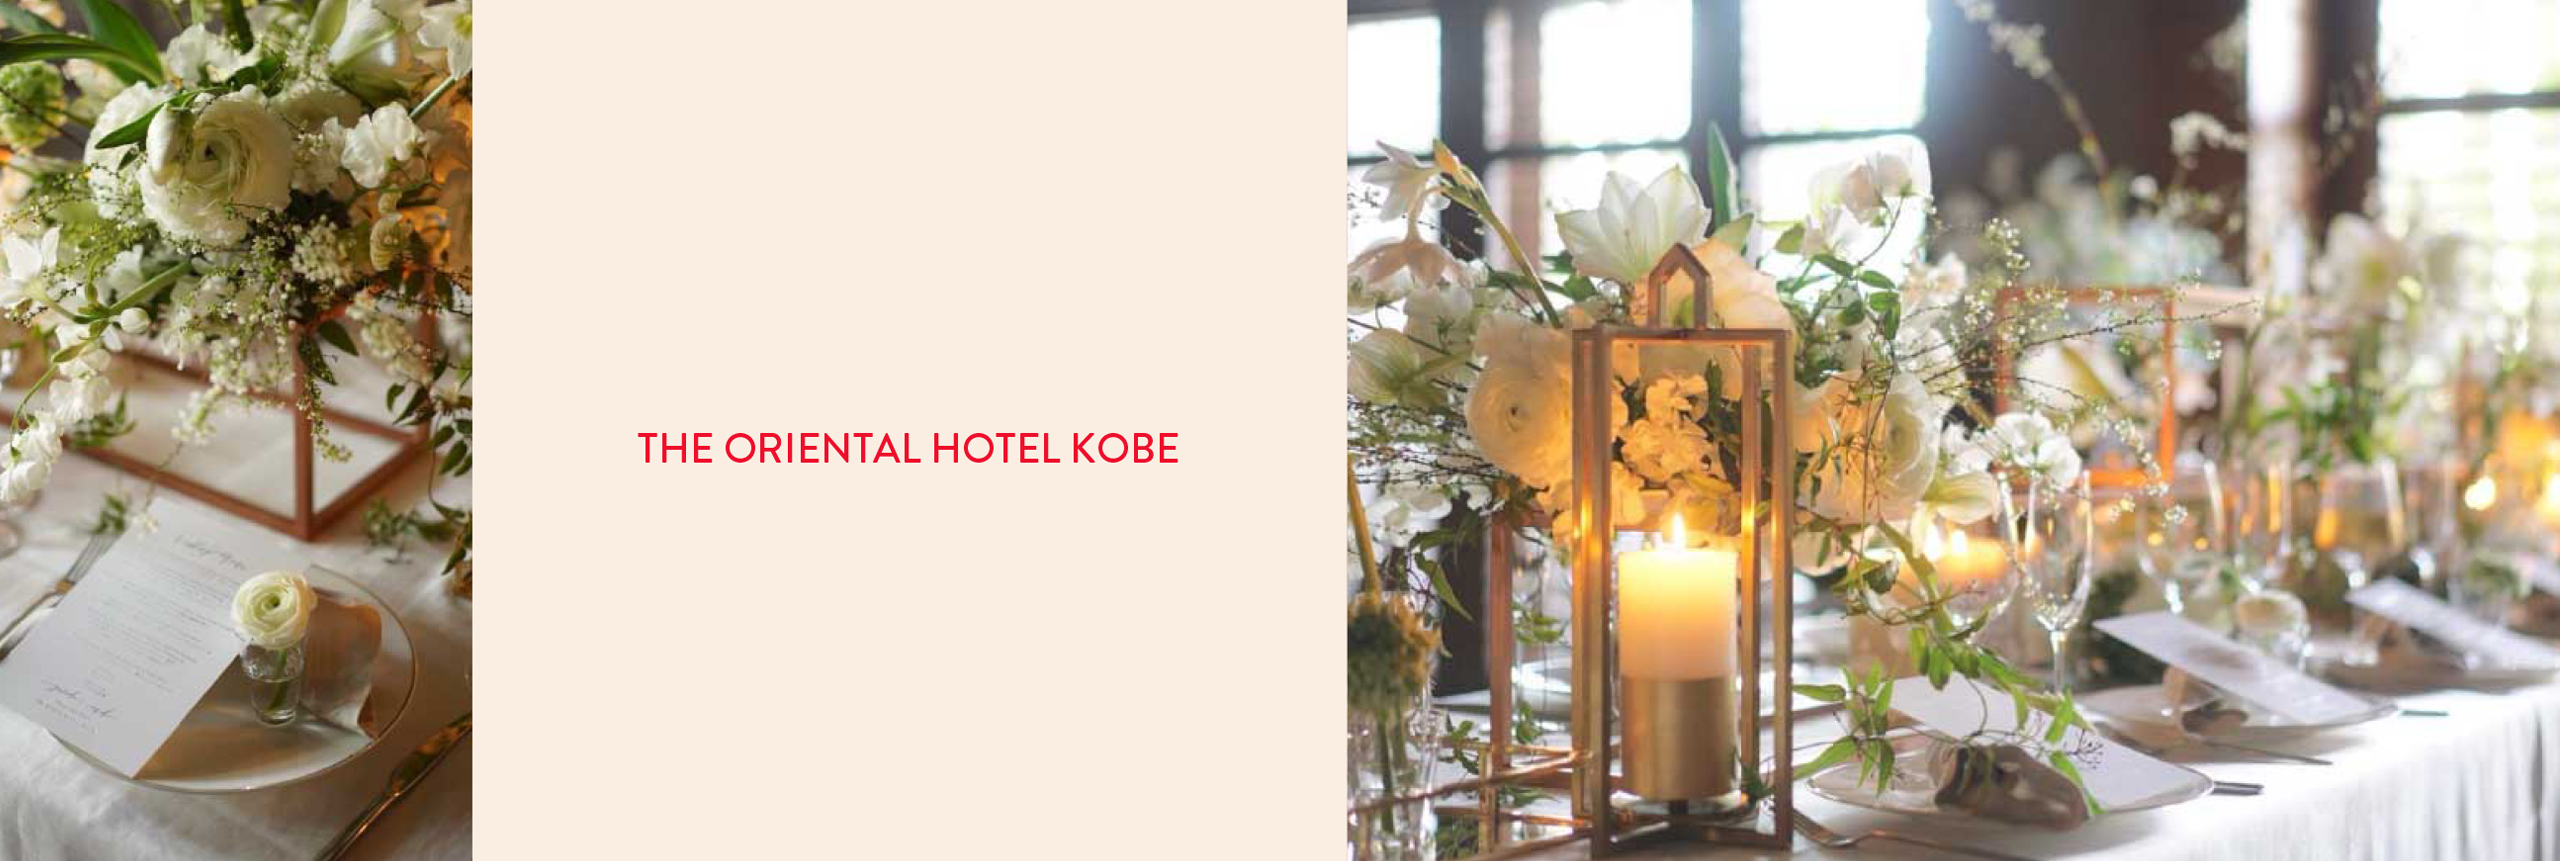 THE ORIENTAL HOTEL KOBE